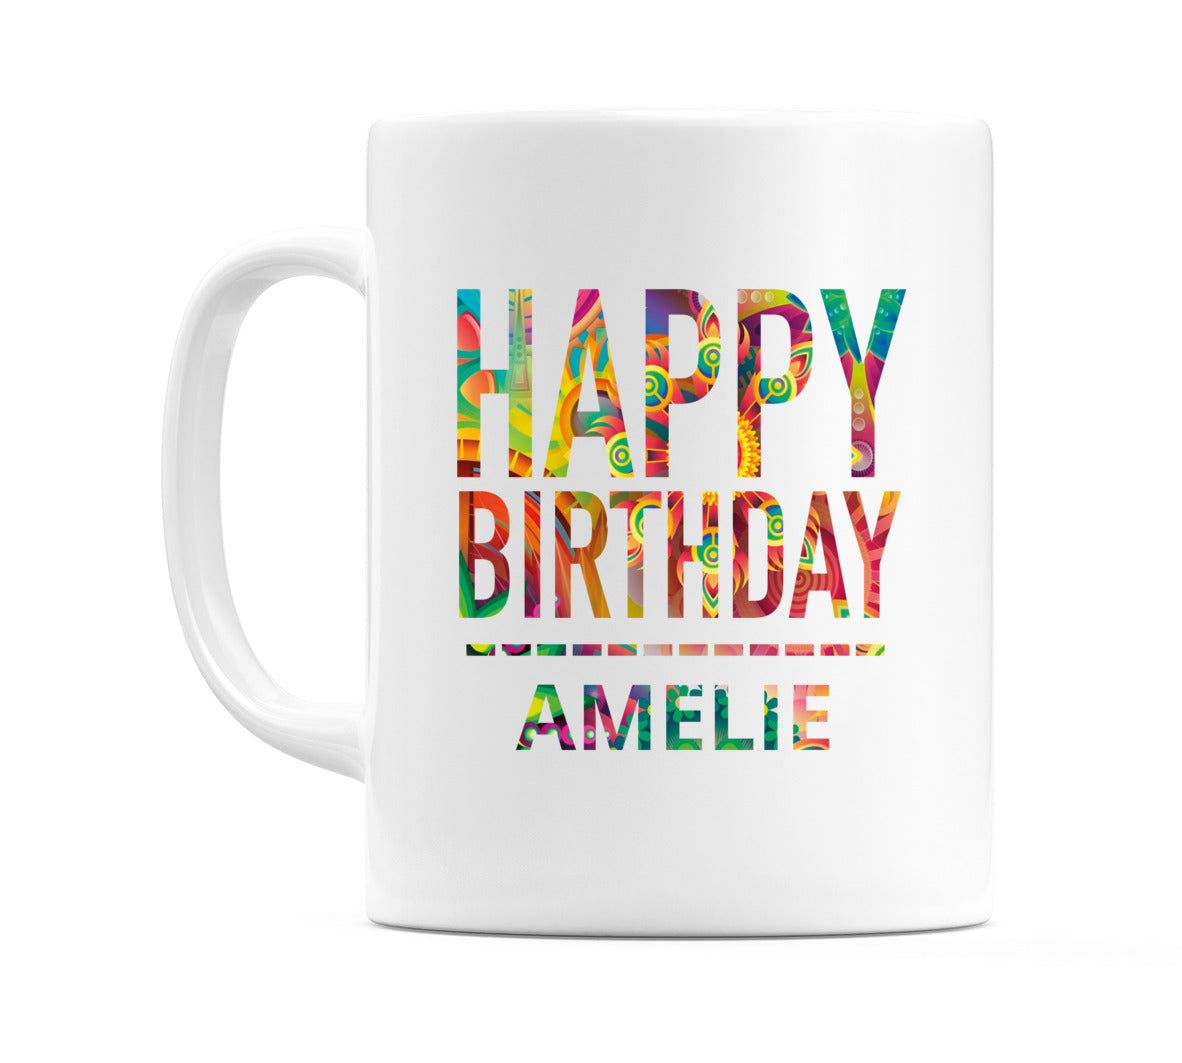 Happy Birthday Amelie (Tie Dye Effect) Mug Cup by WeDoMugs